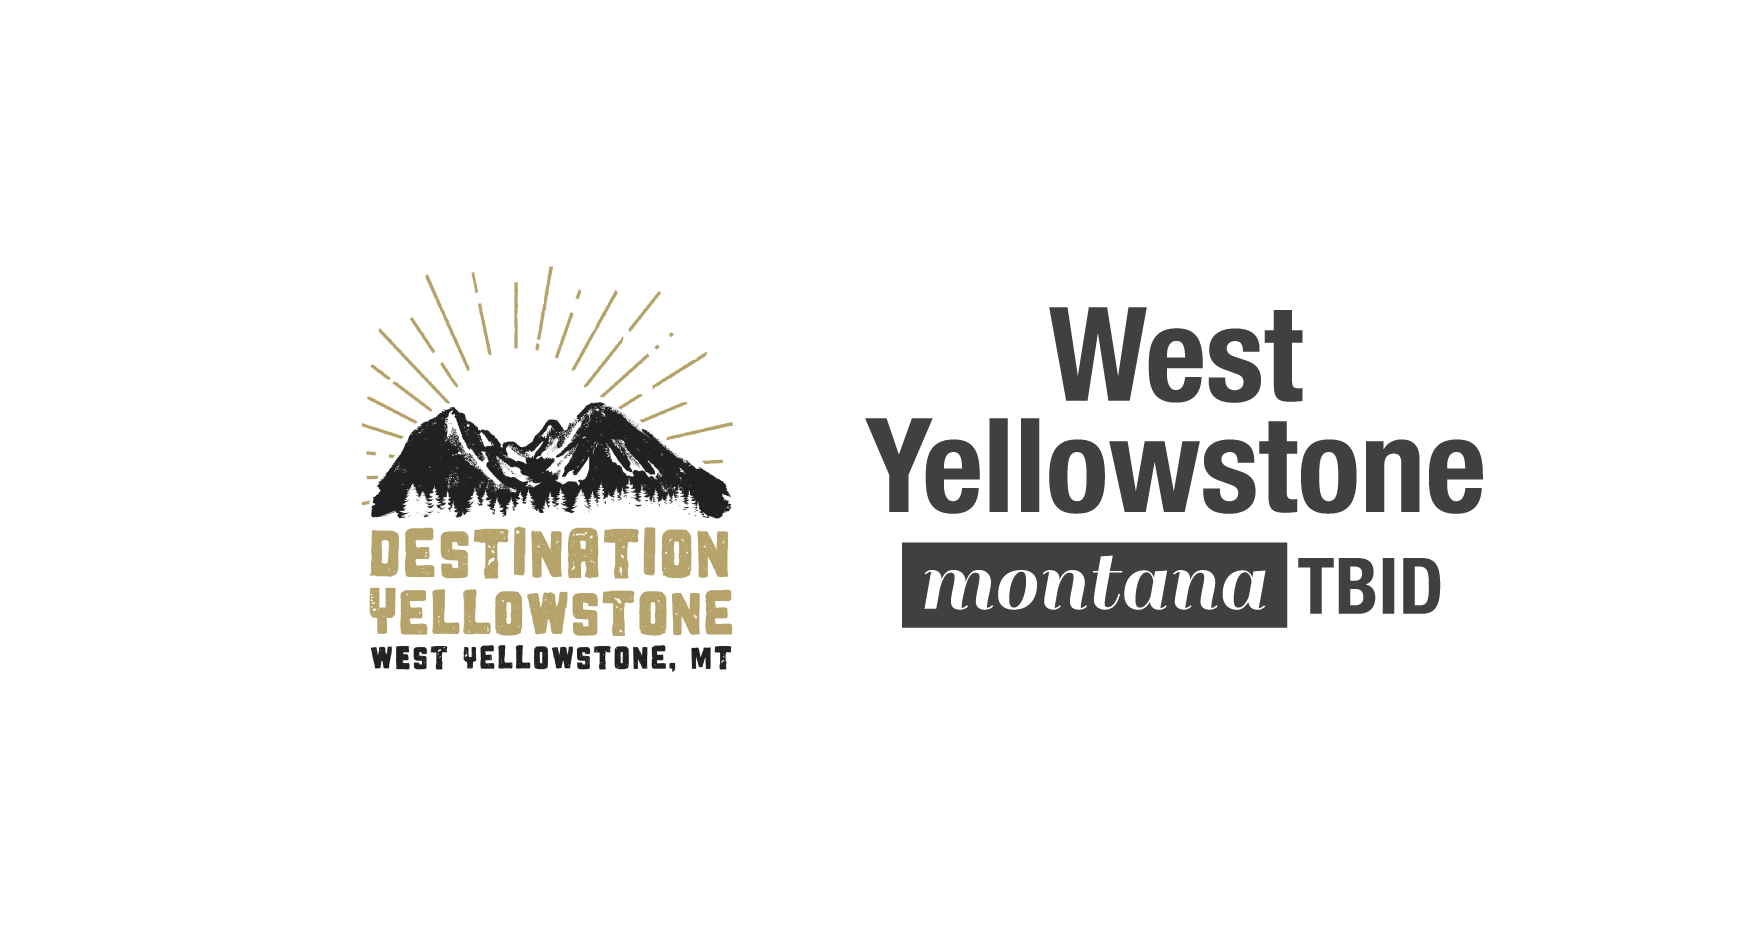 West Yellowstone logos